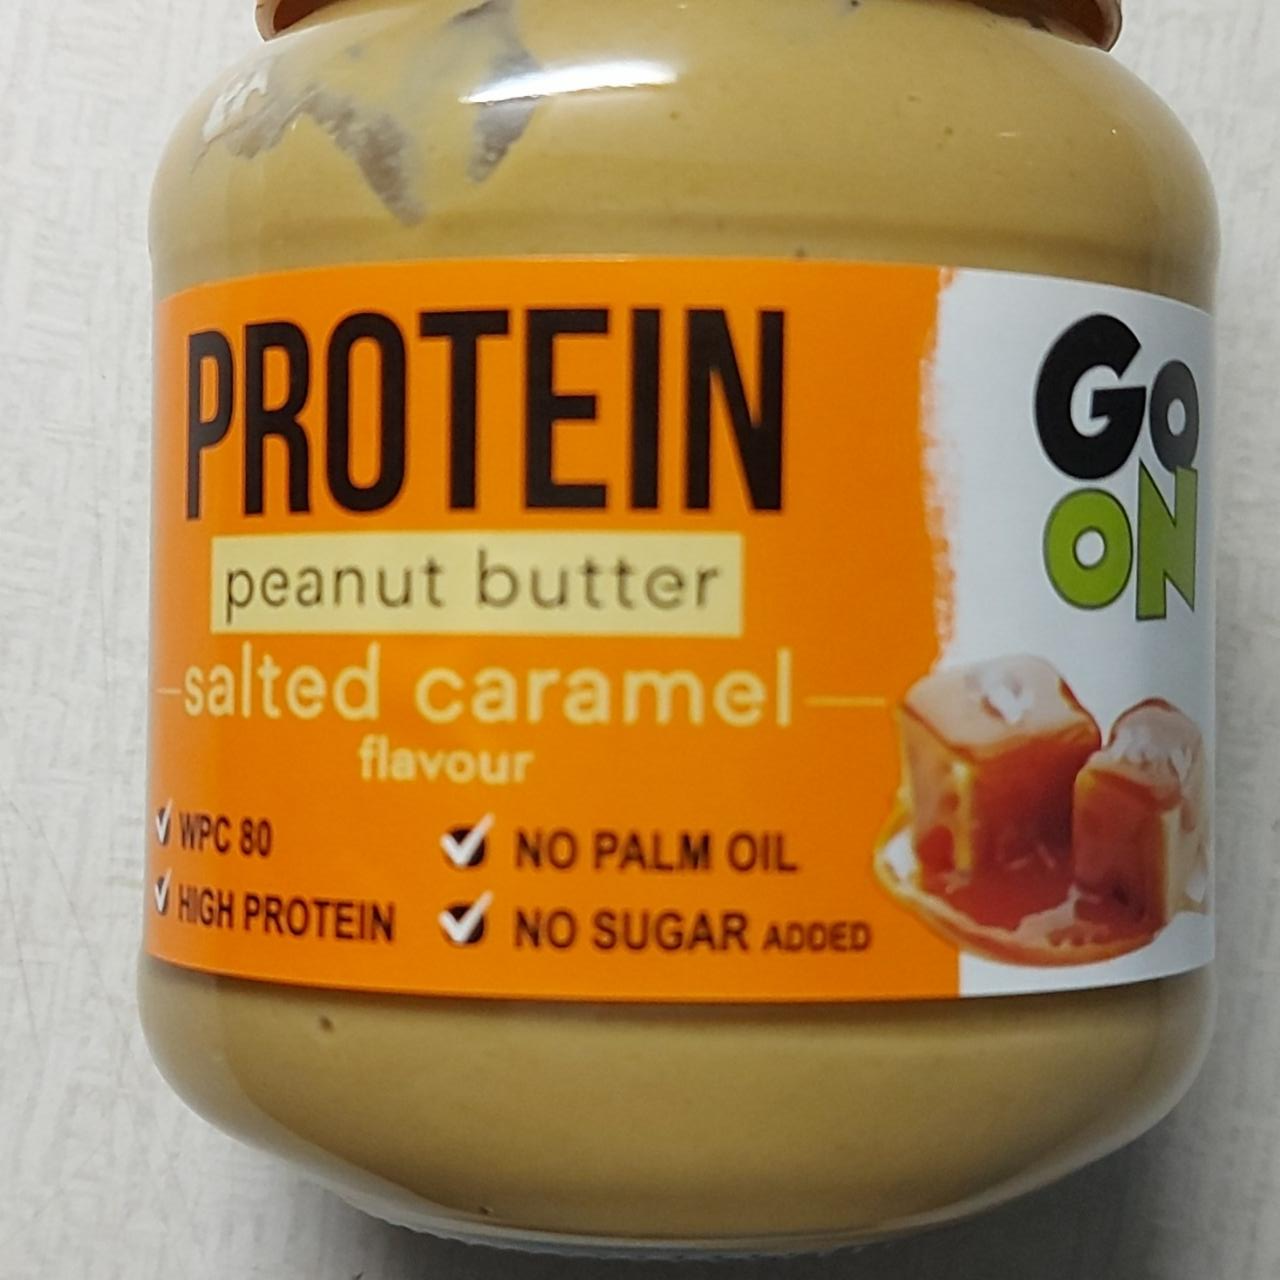 Képek - Protein penaut butter Salted caramel Go On